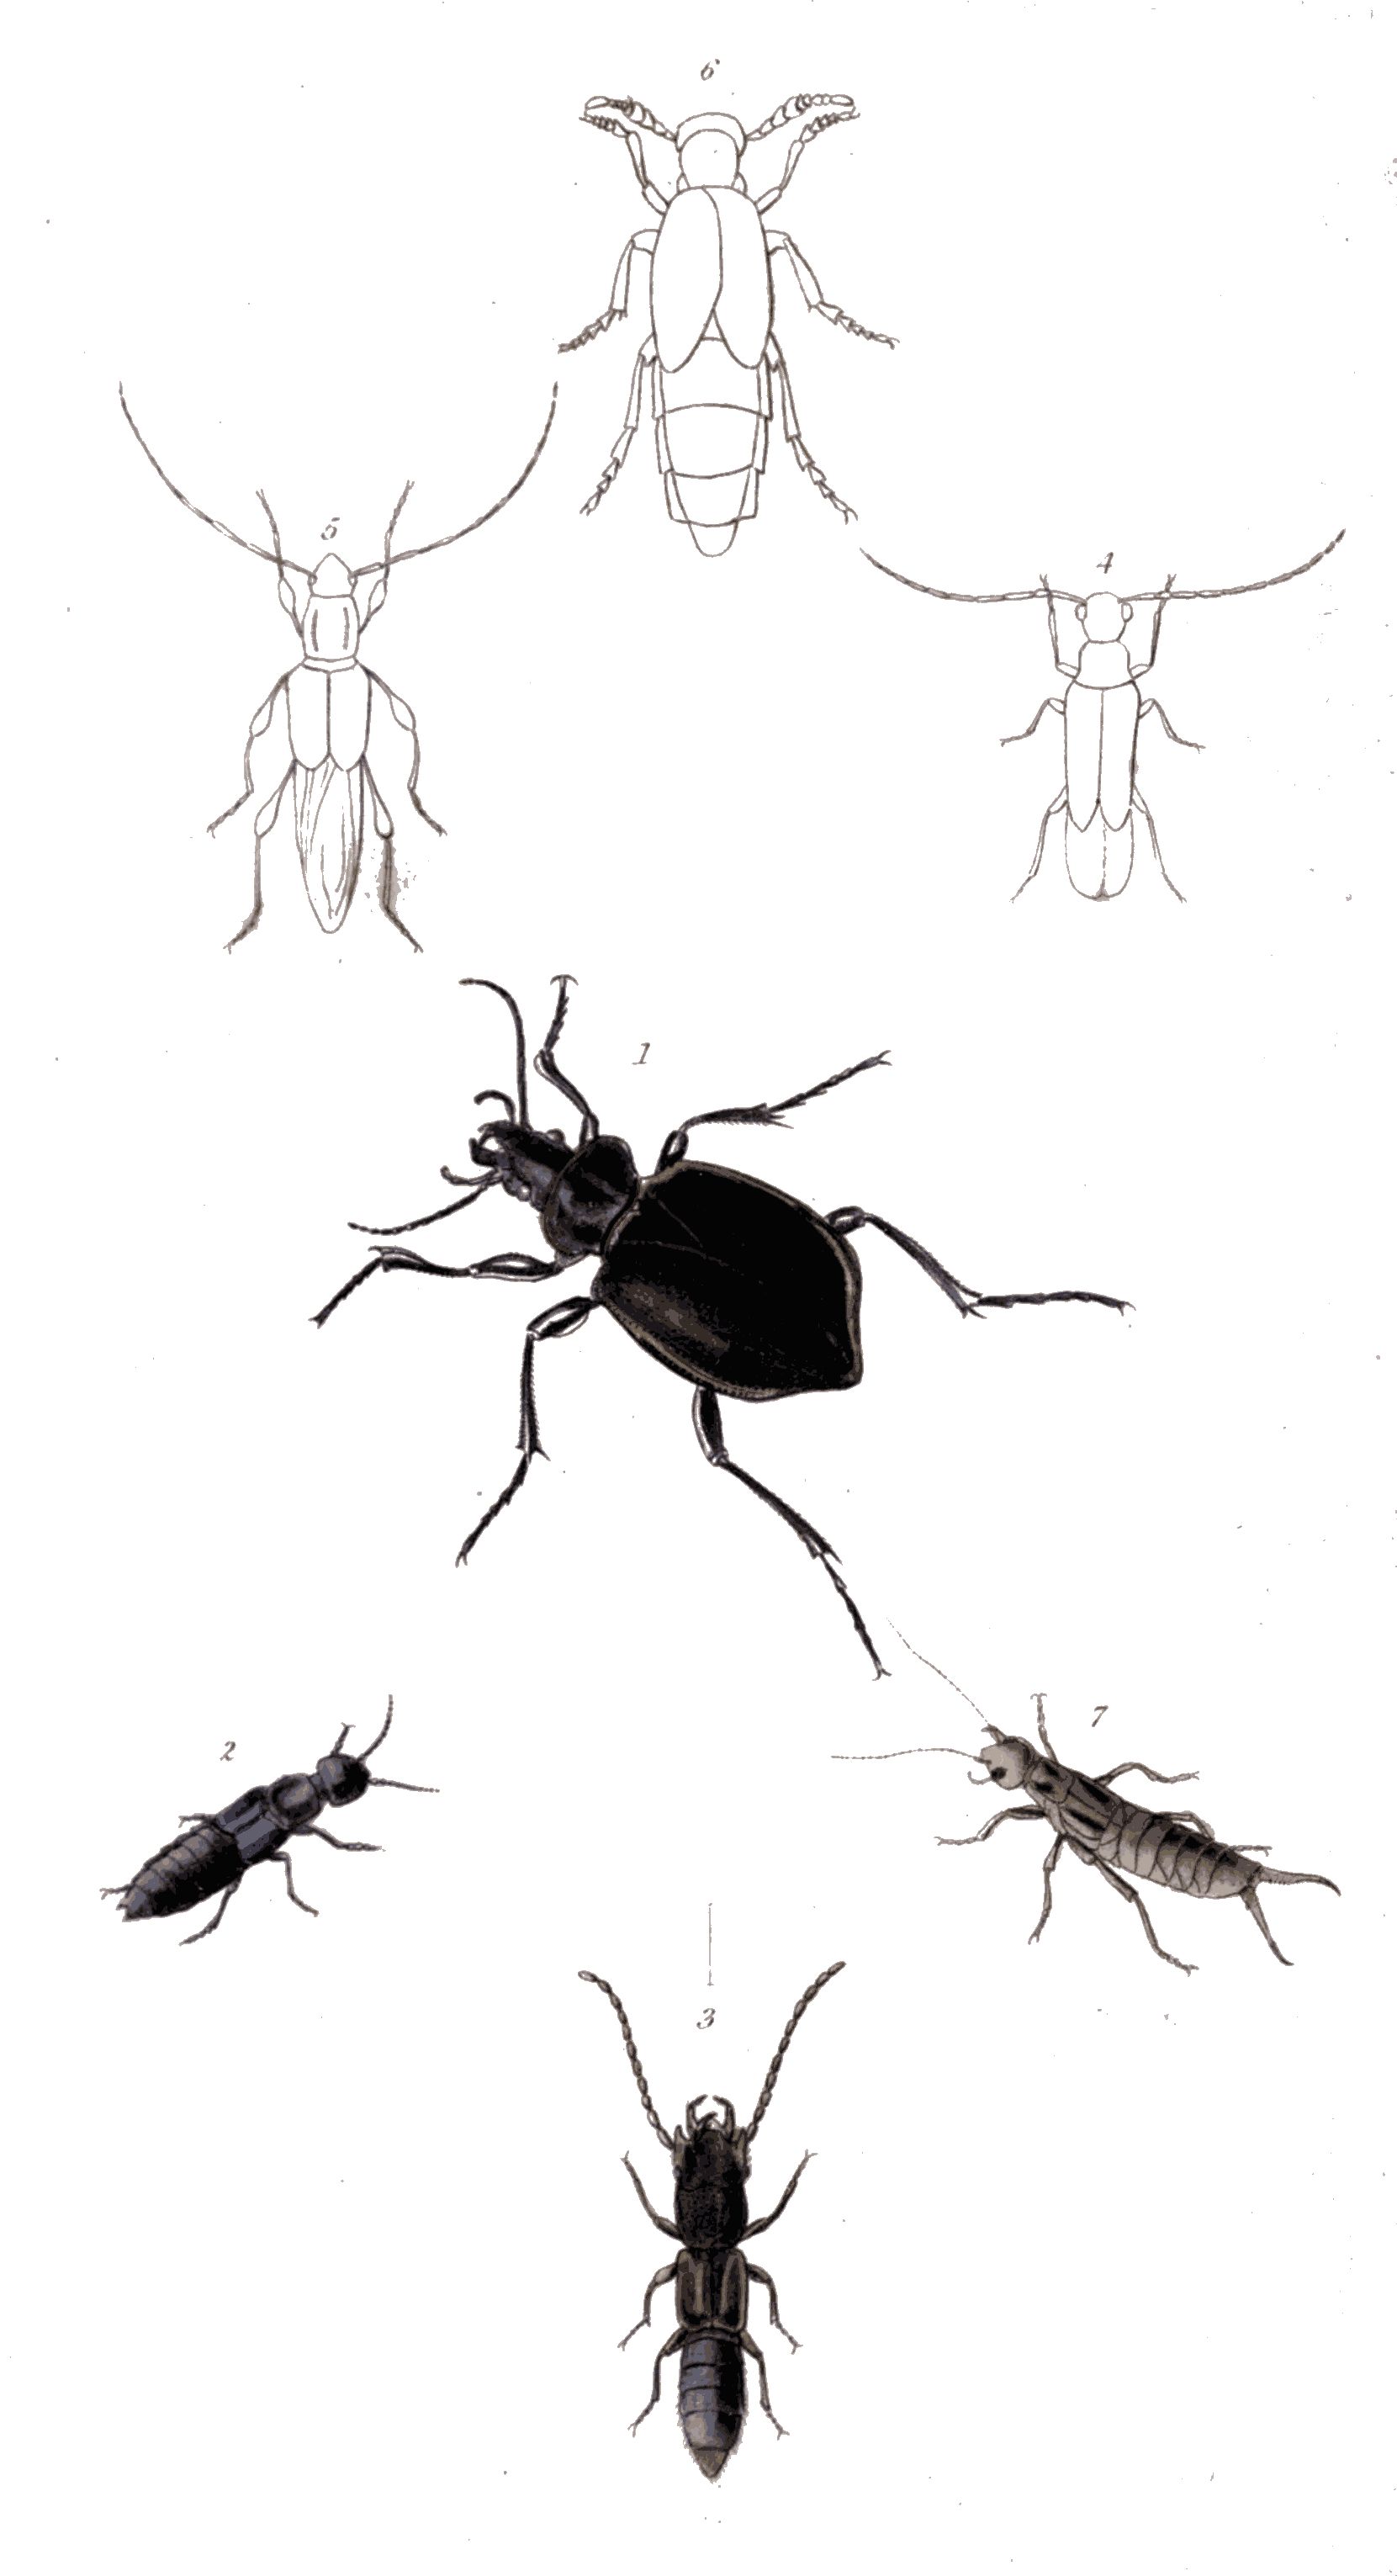 Insects Entomology Bugs Butterflies Ants Metamorphosis etc Media ebooks Link 